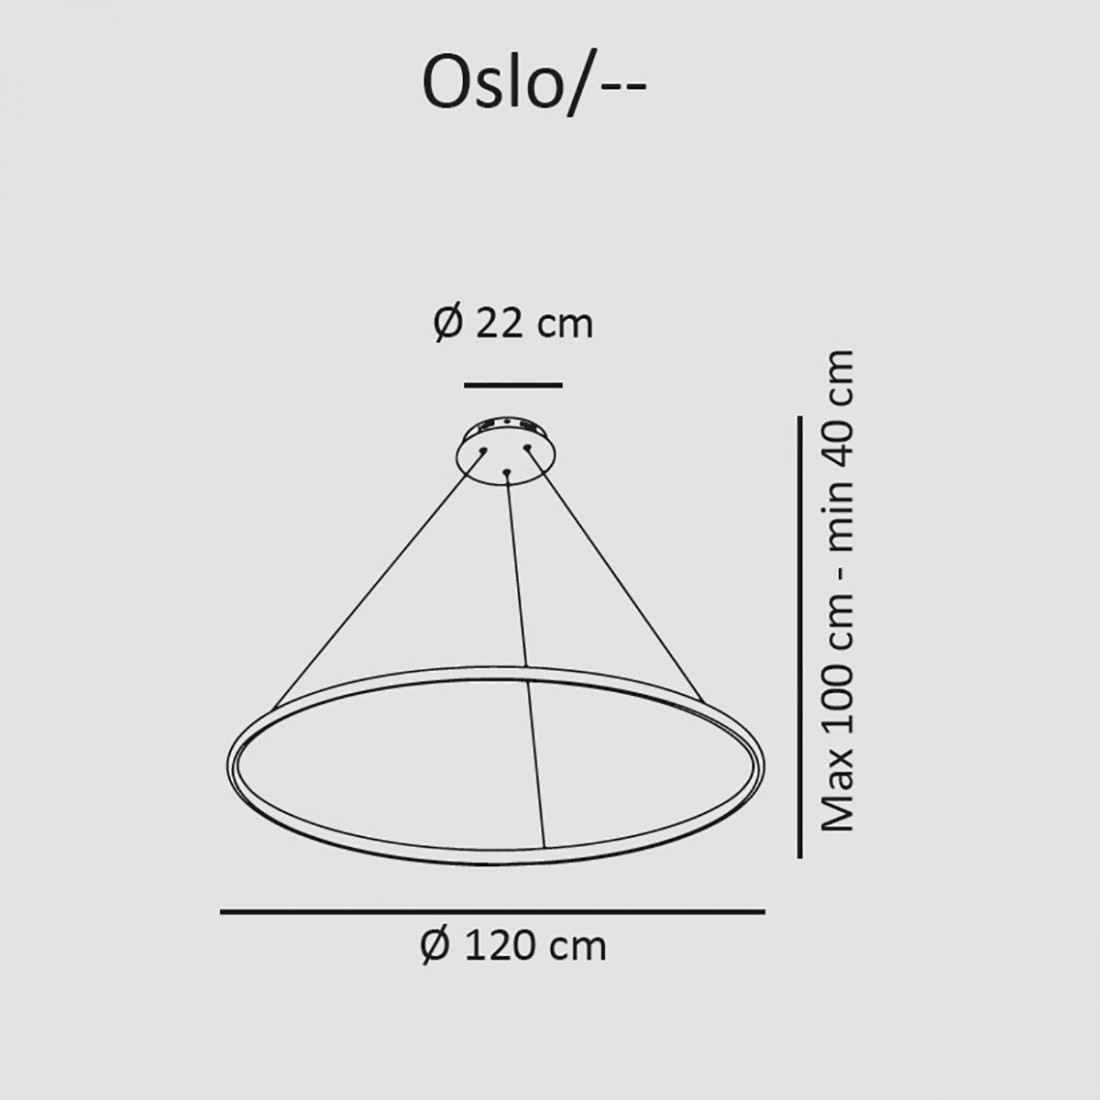 Sikrea Group OSLO S 2628 2611 lámpara led moderna